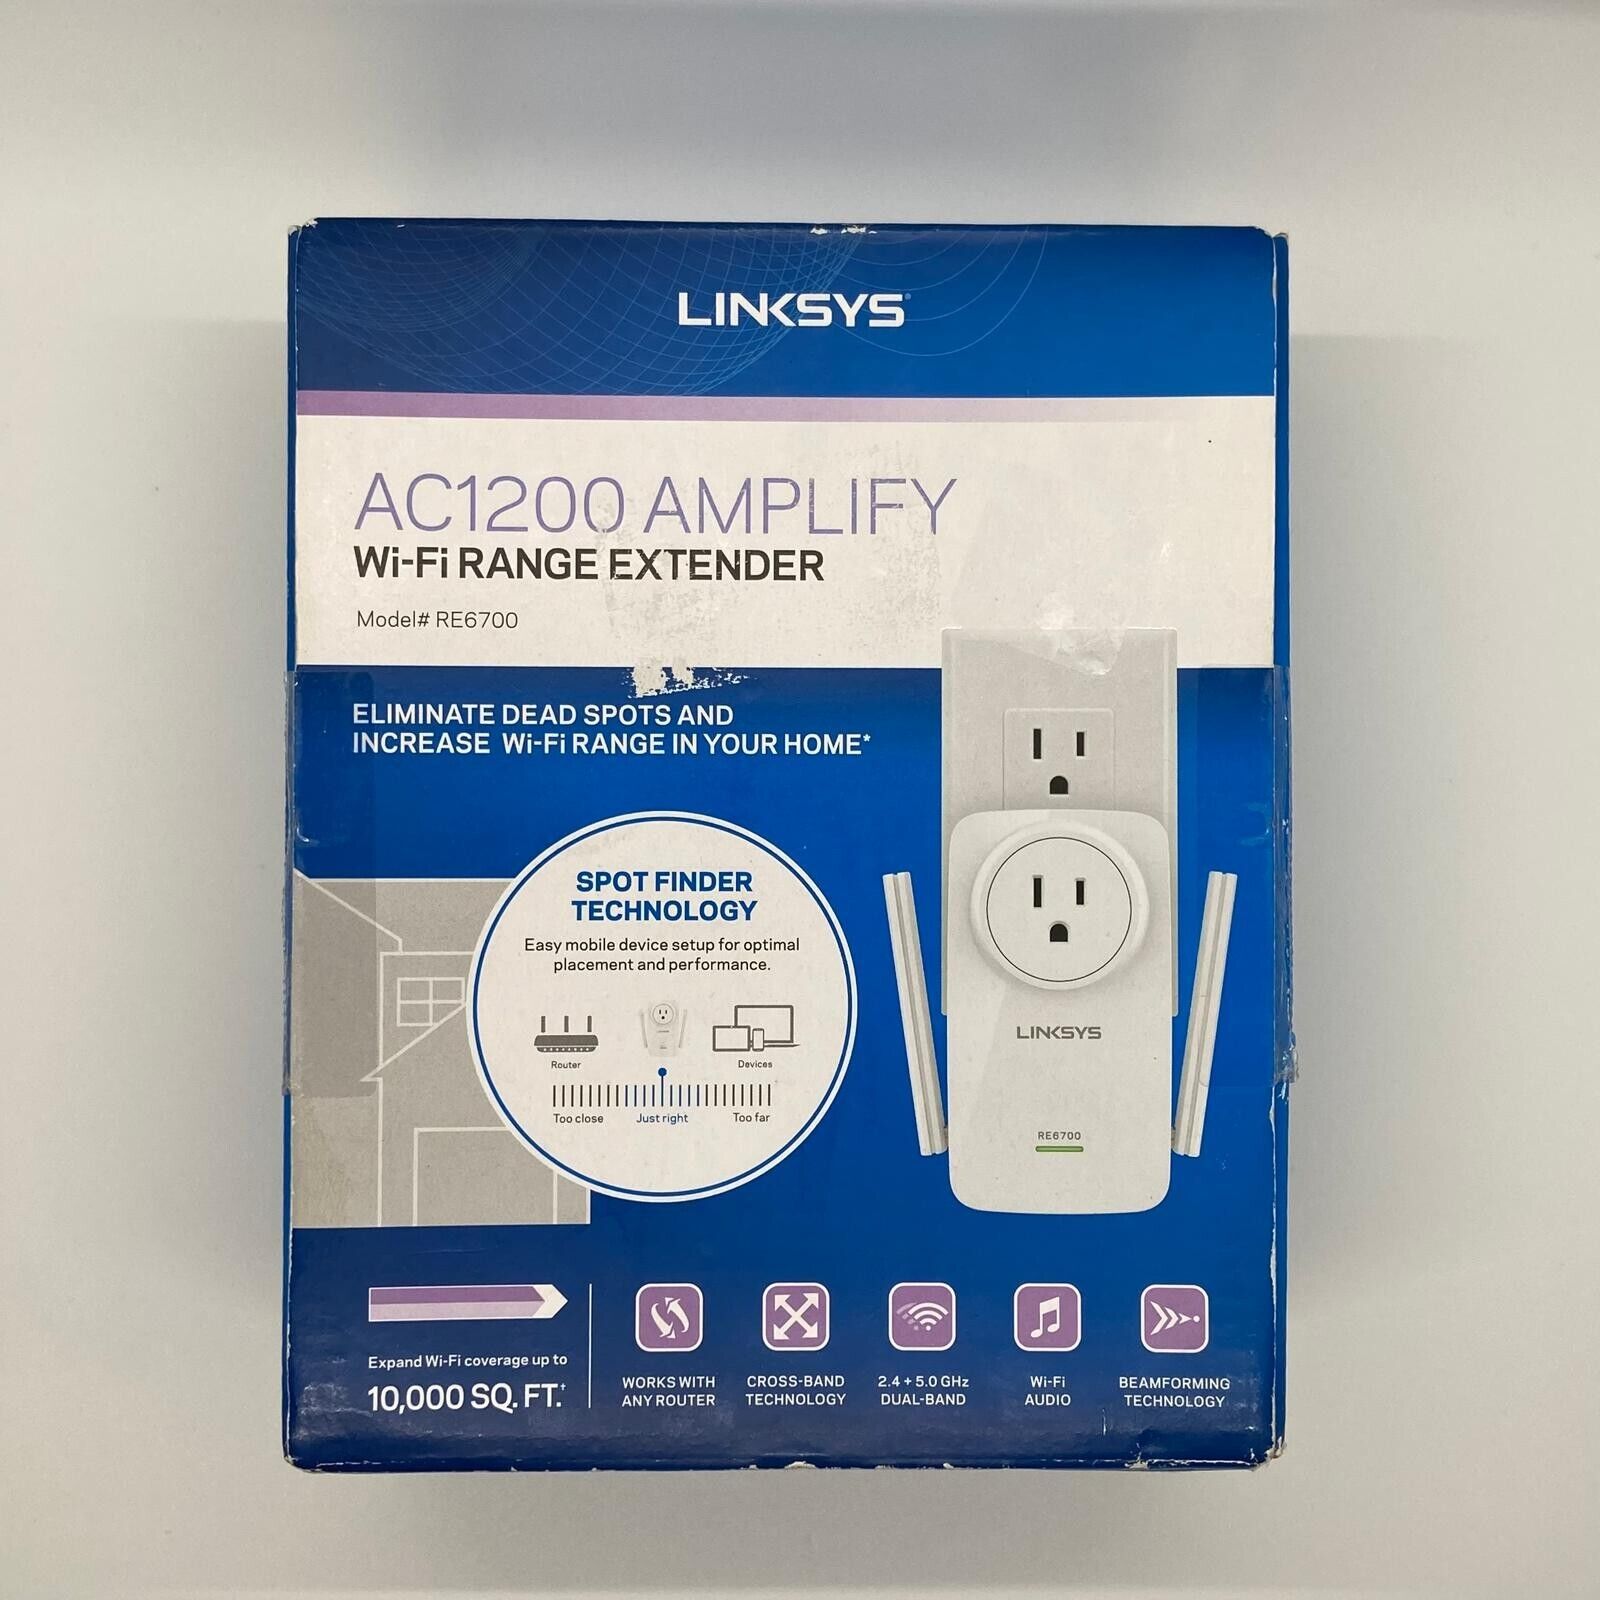 Linksys AC1200 Amplify Wi-Fi Range Extender Model: RE6700 Dual Band 